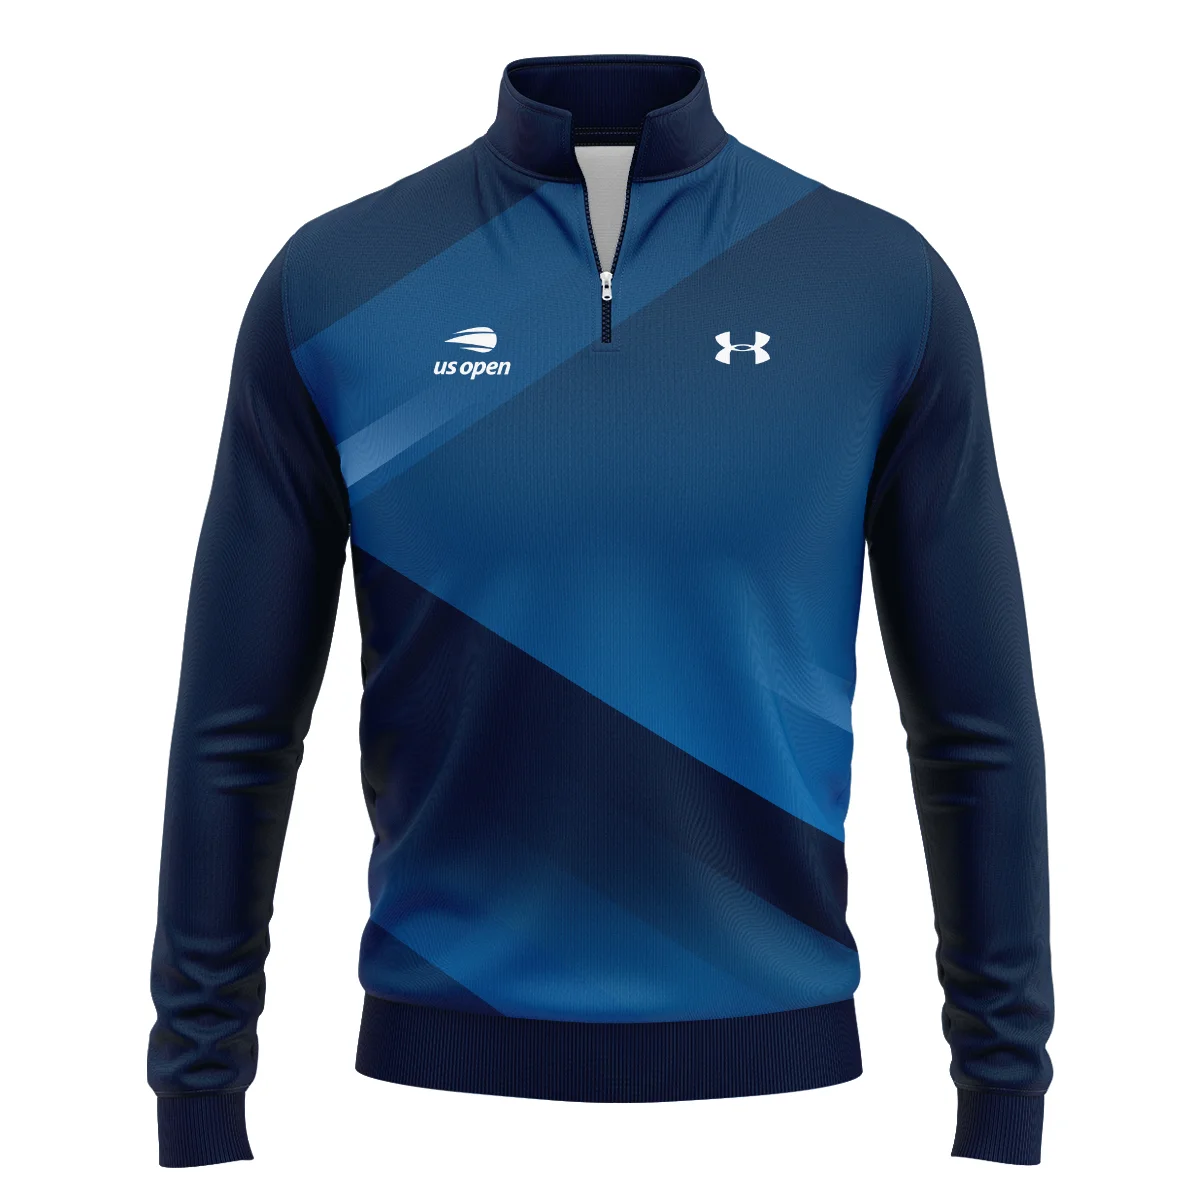 US Open Tennis Champions Dark Blue Background Under Armour Mandarin collar Quater-Zip Long Sleeve